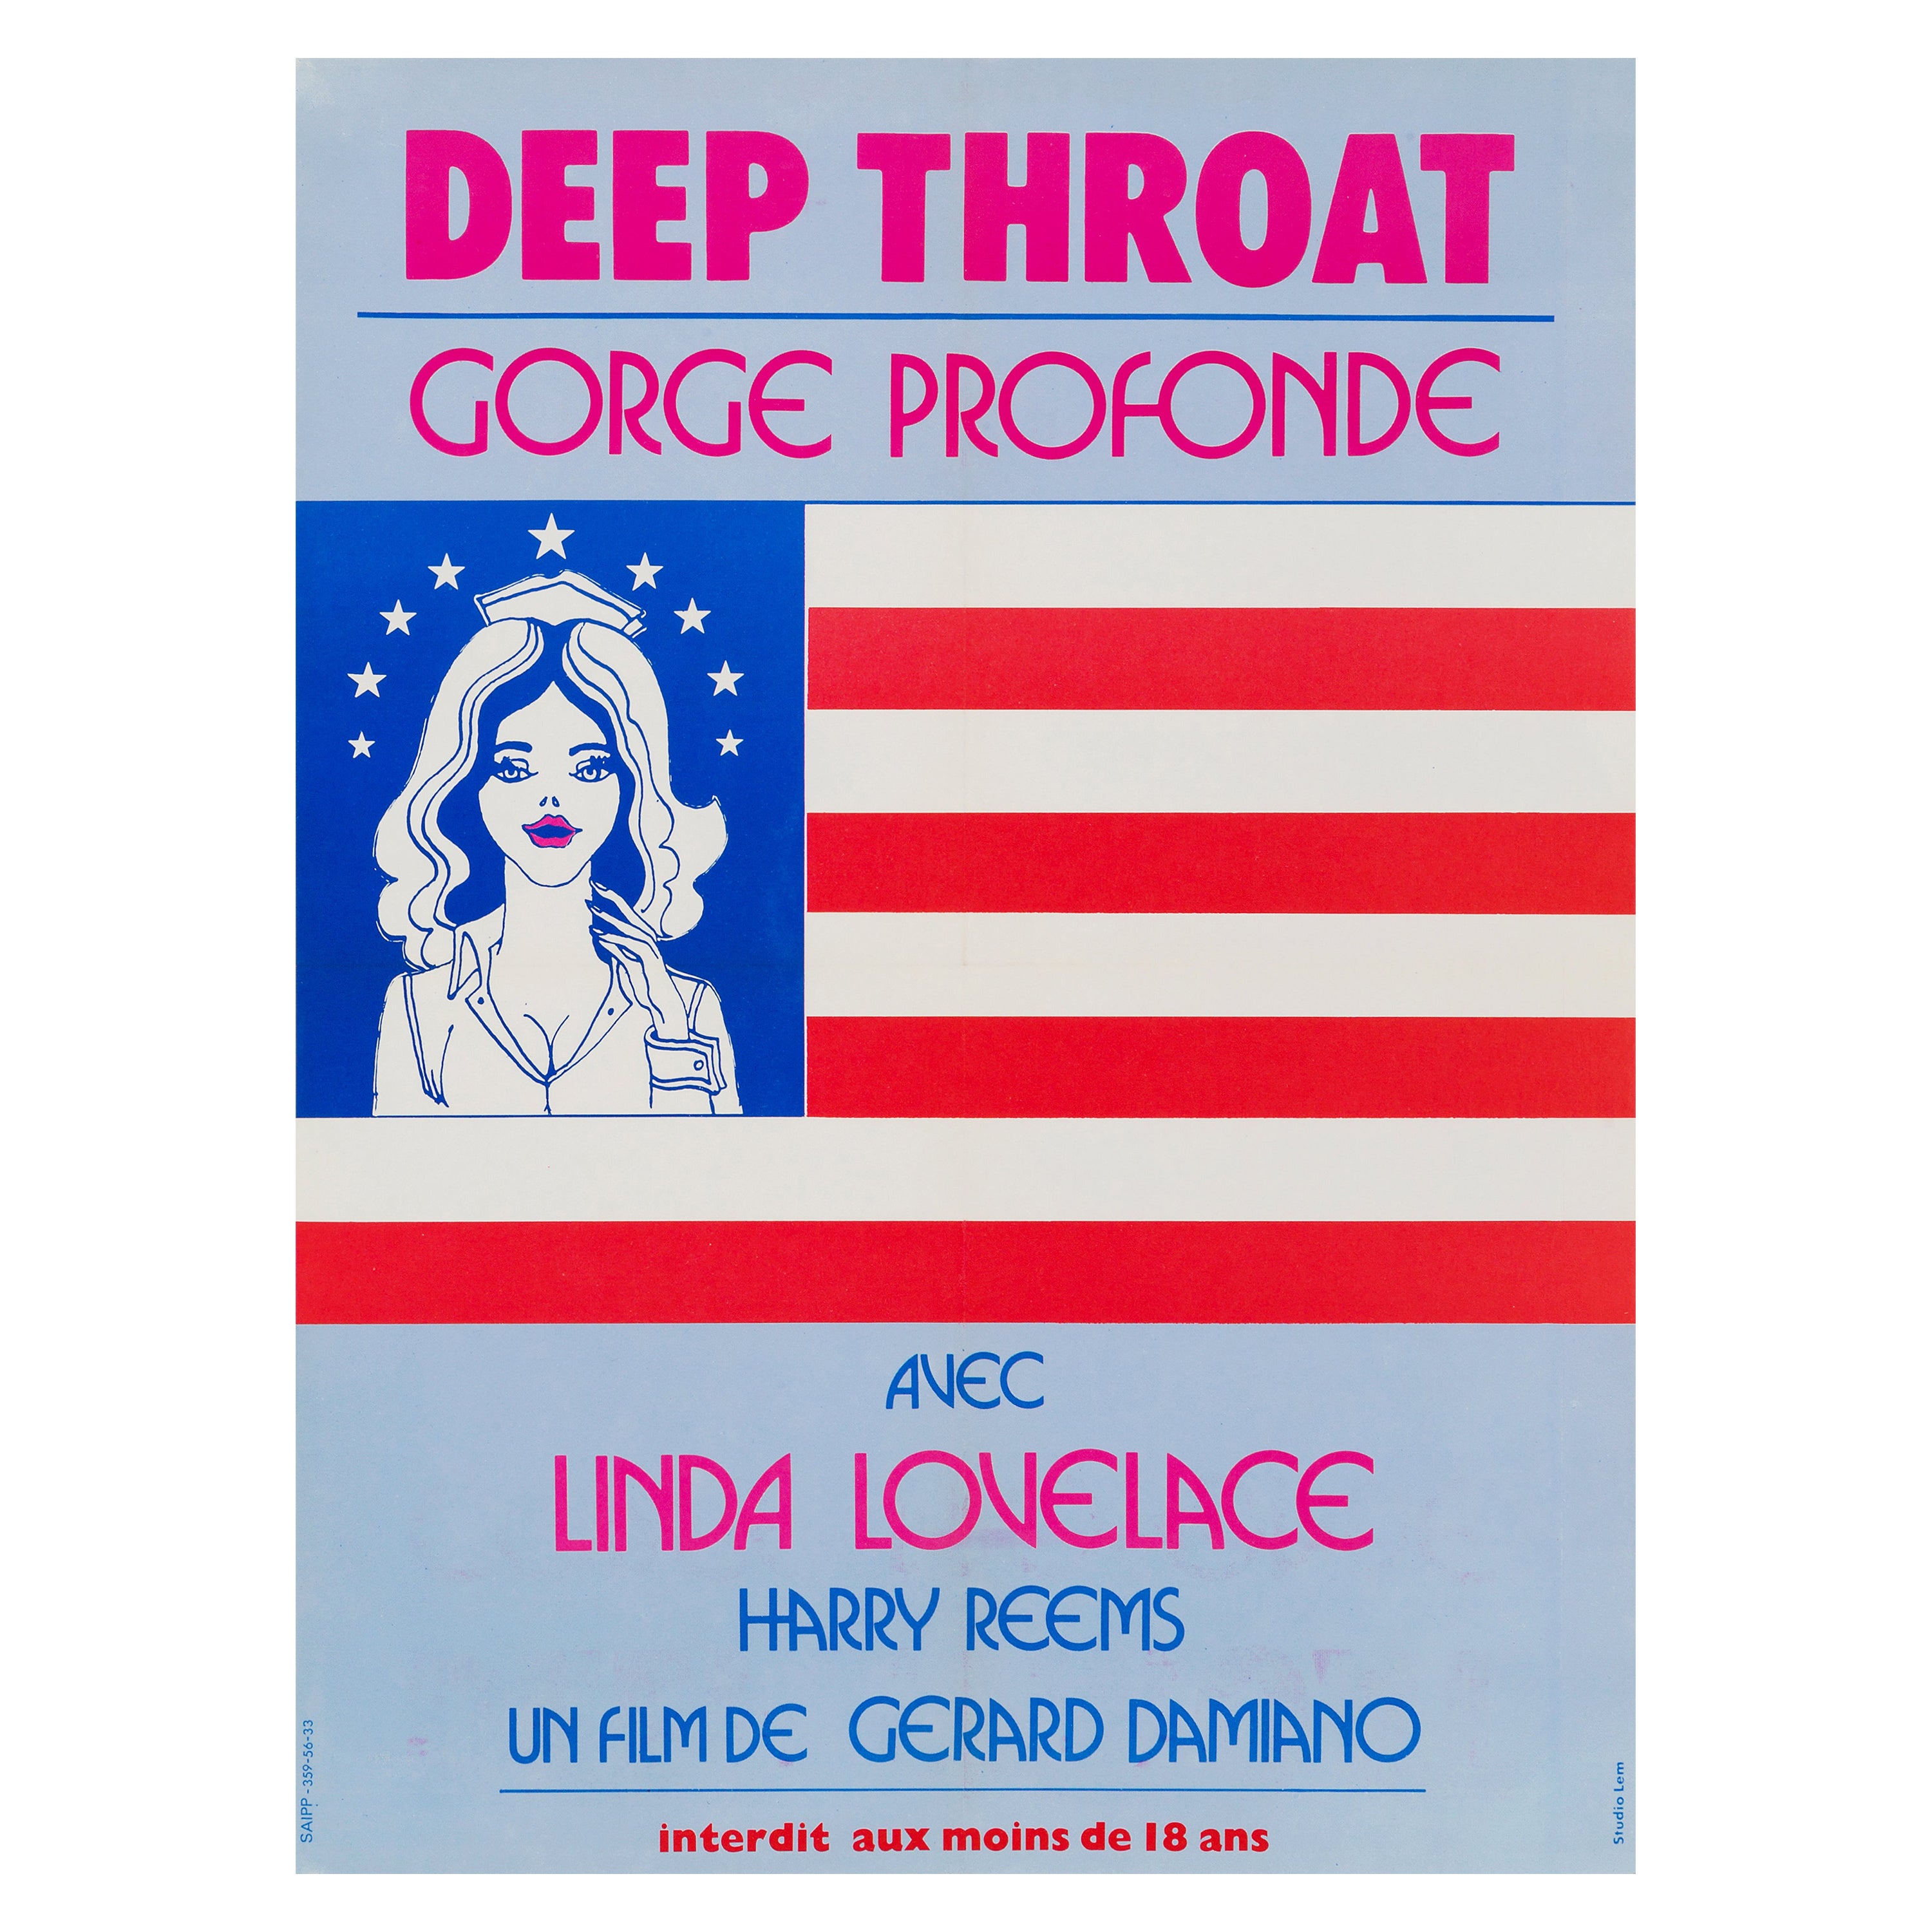 'Deep Throat' Original Vintage Movie Poster by Studio Lem, French, 1975